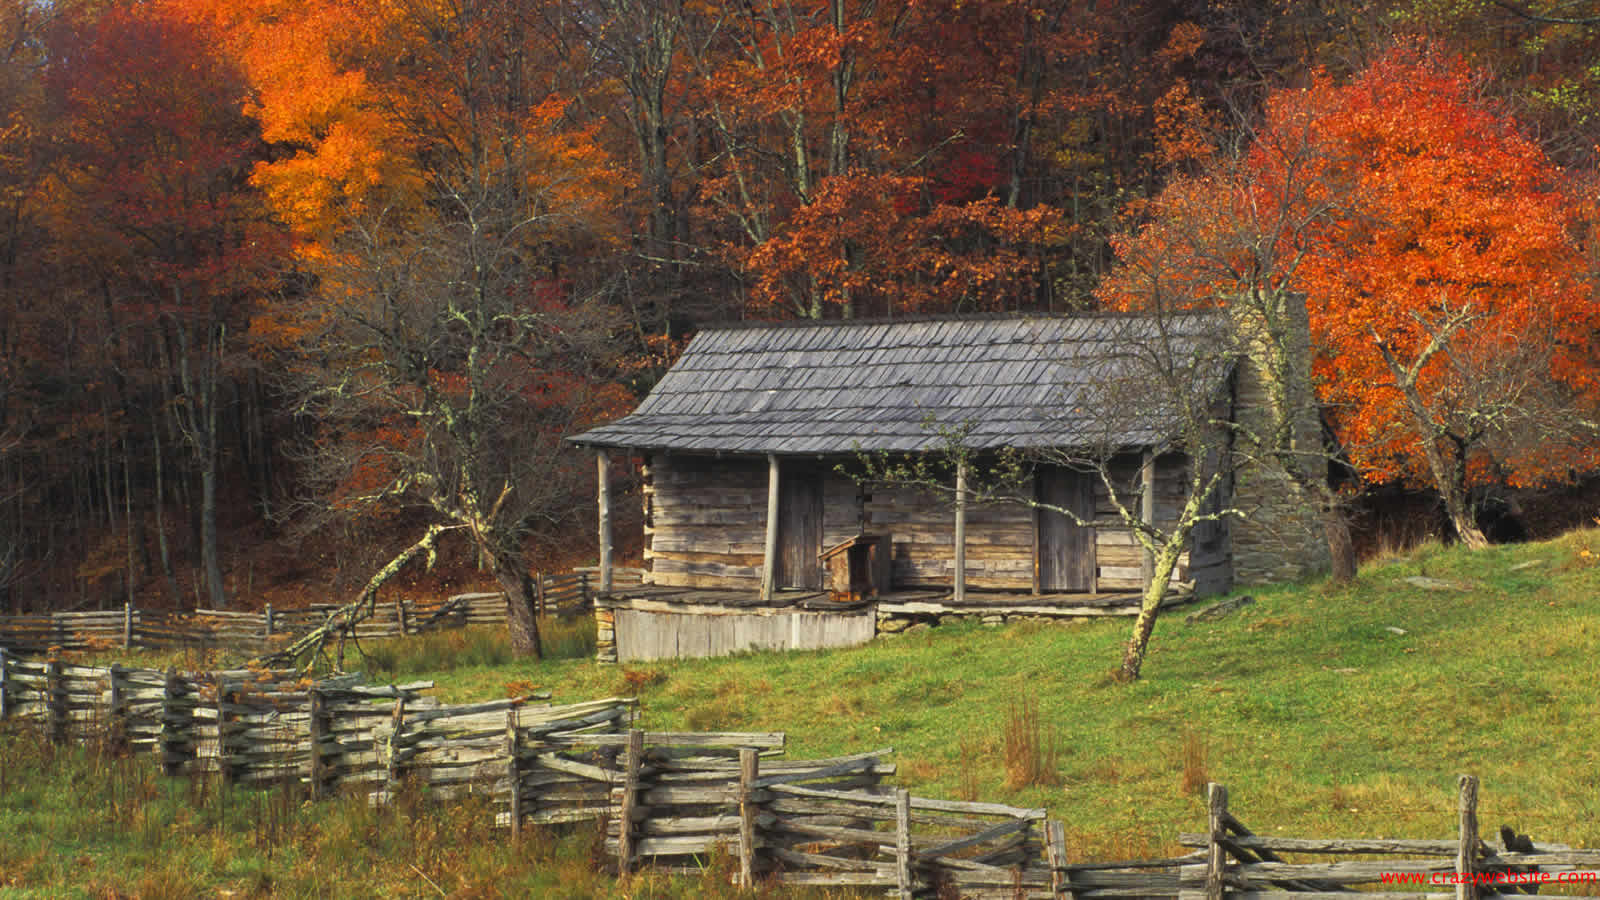 Autumn Colors Country Desktop Wallpaper Background To Brighten